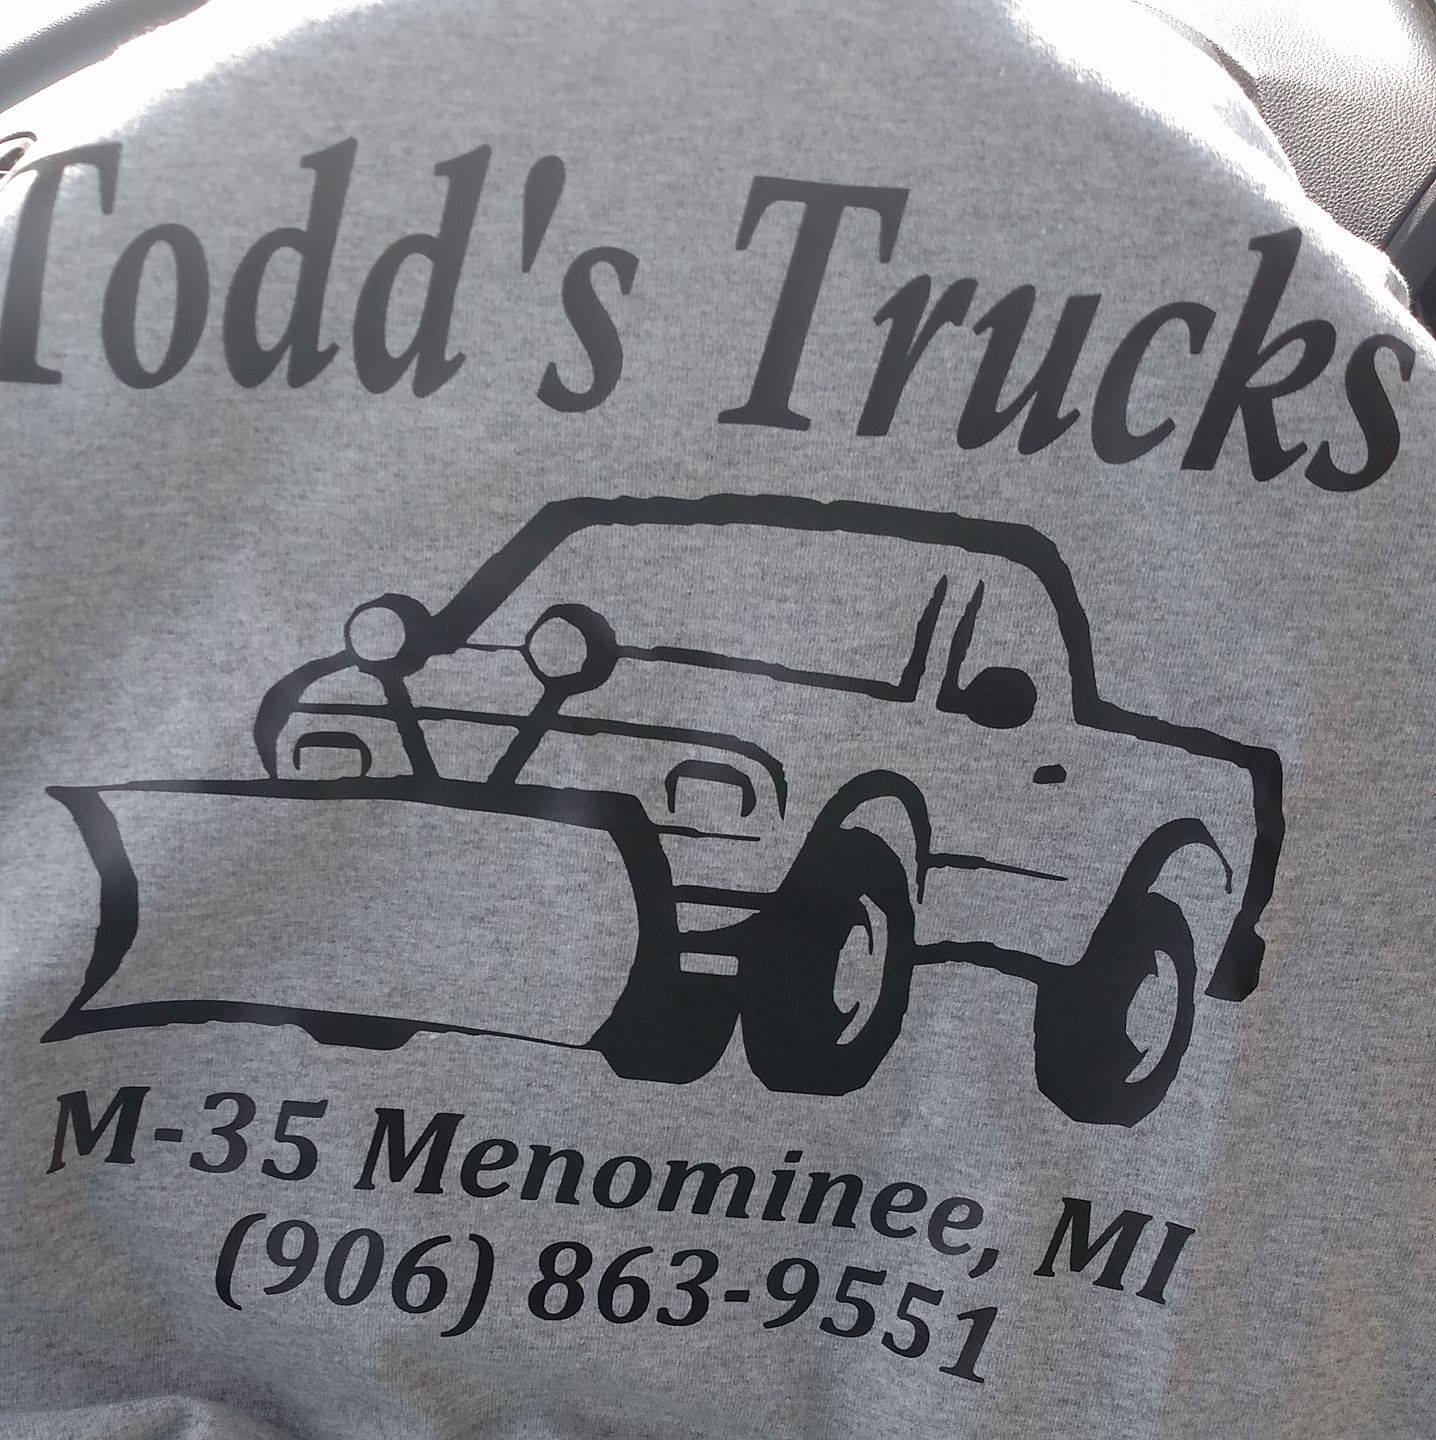 Todd's Trucks